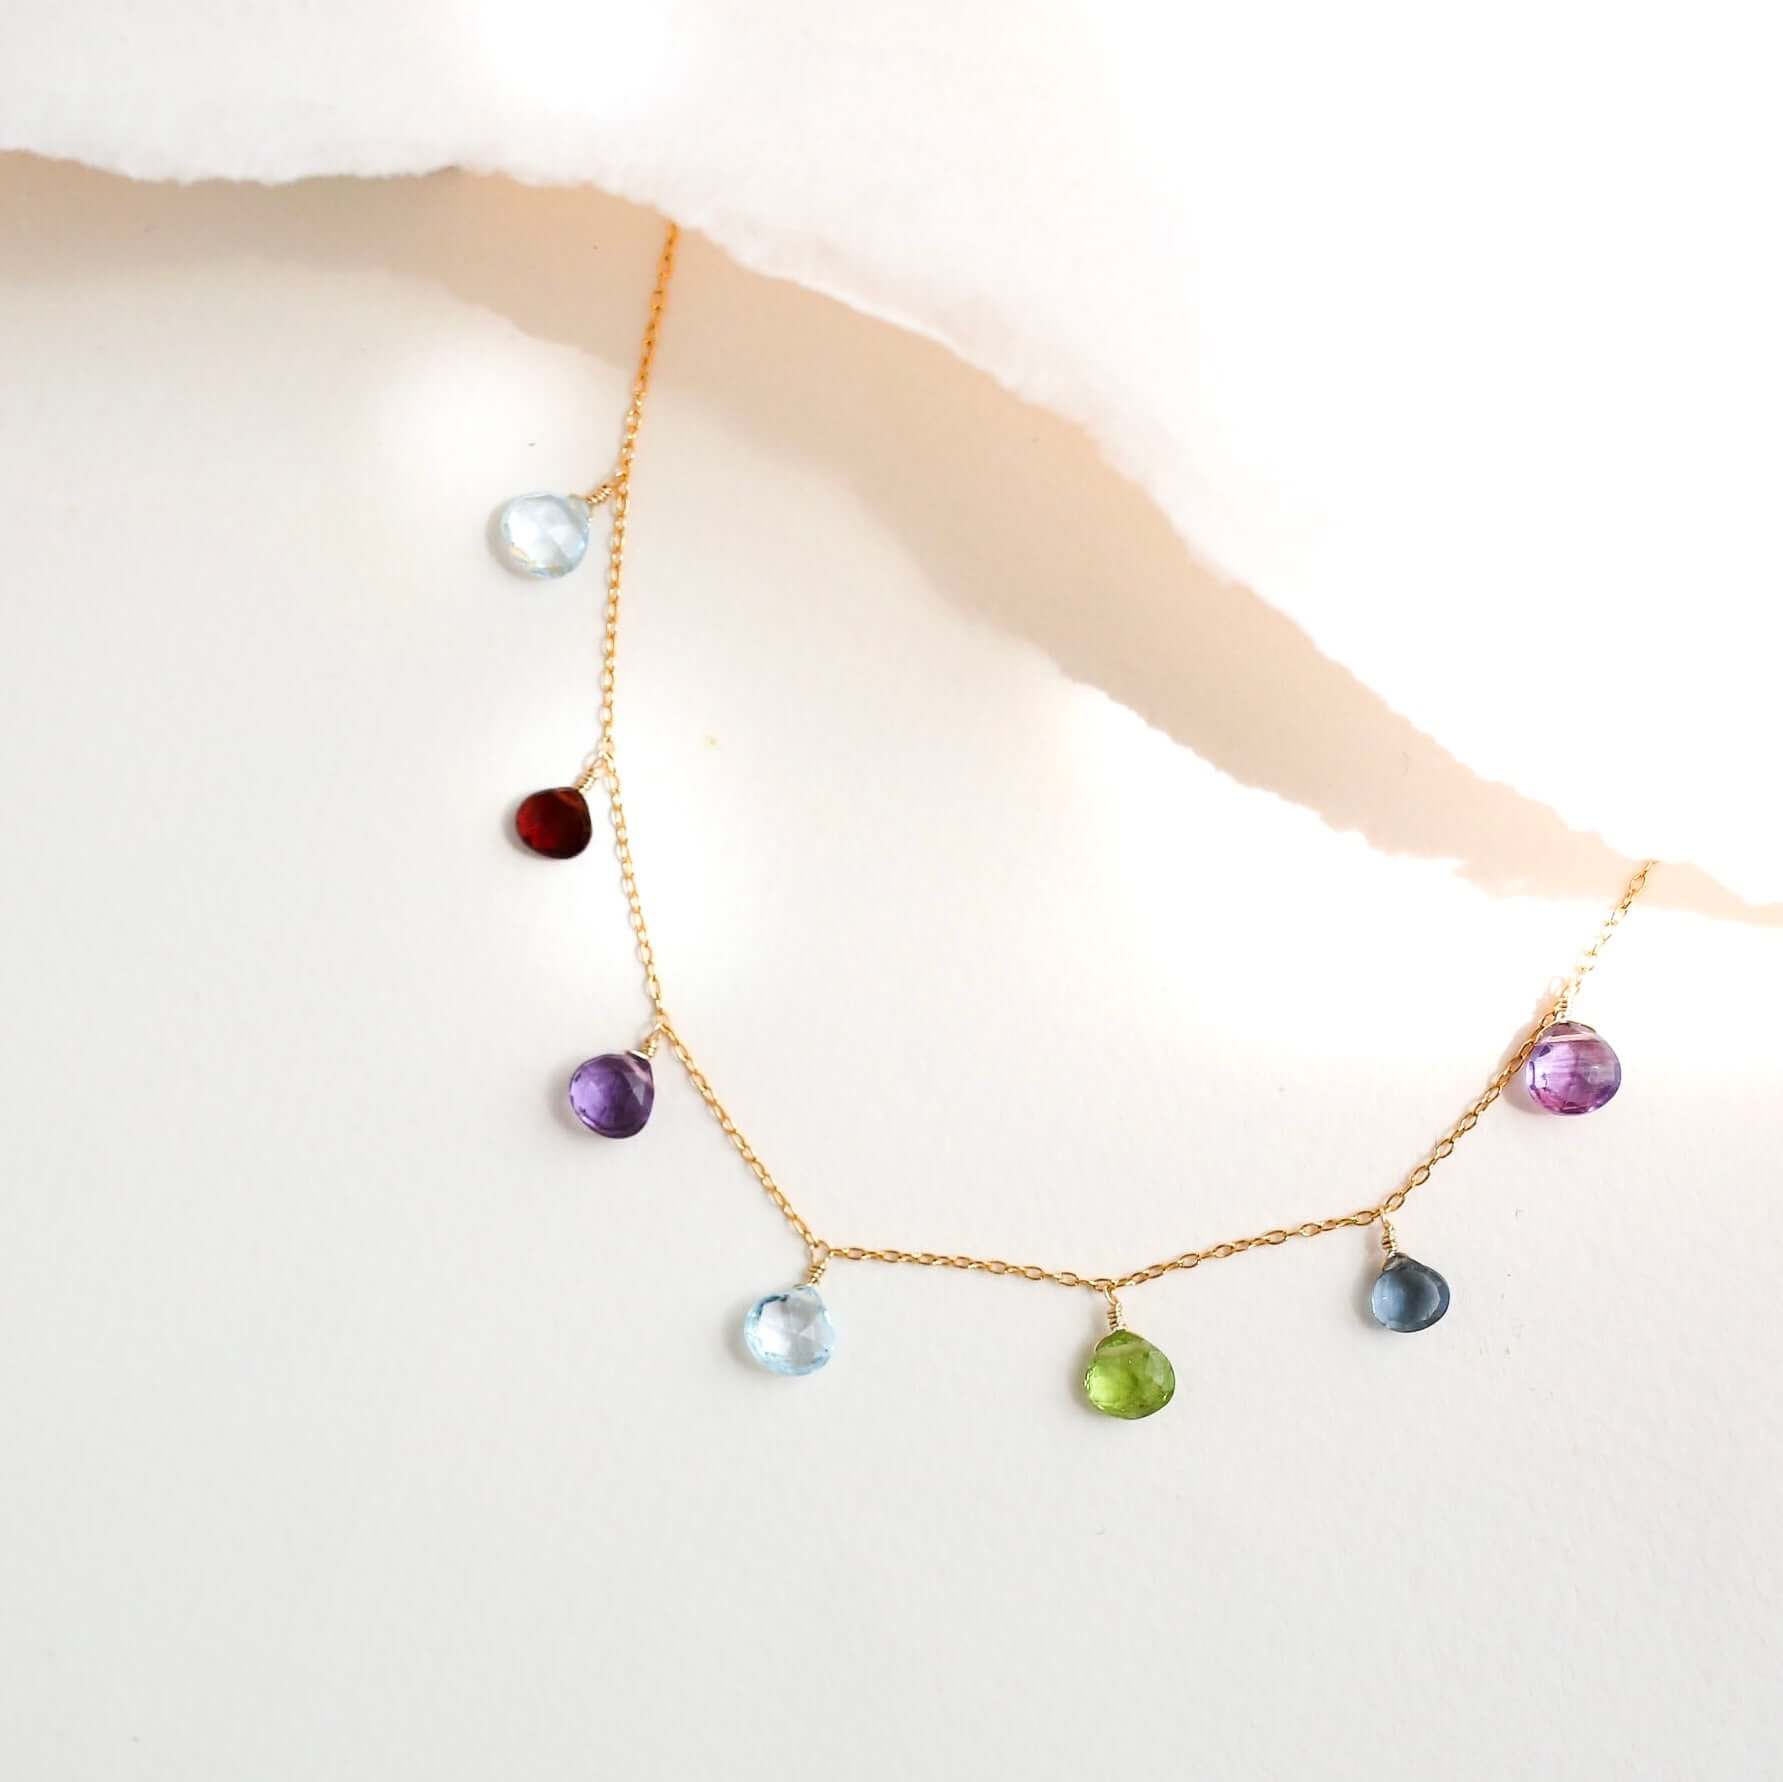 Rainbow Sparkler Necklace - Silver